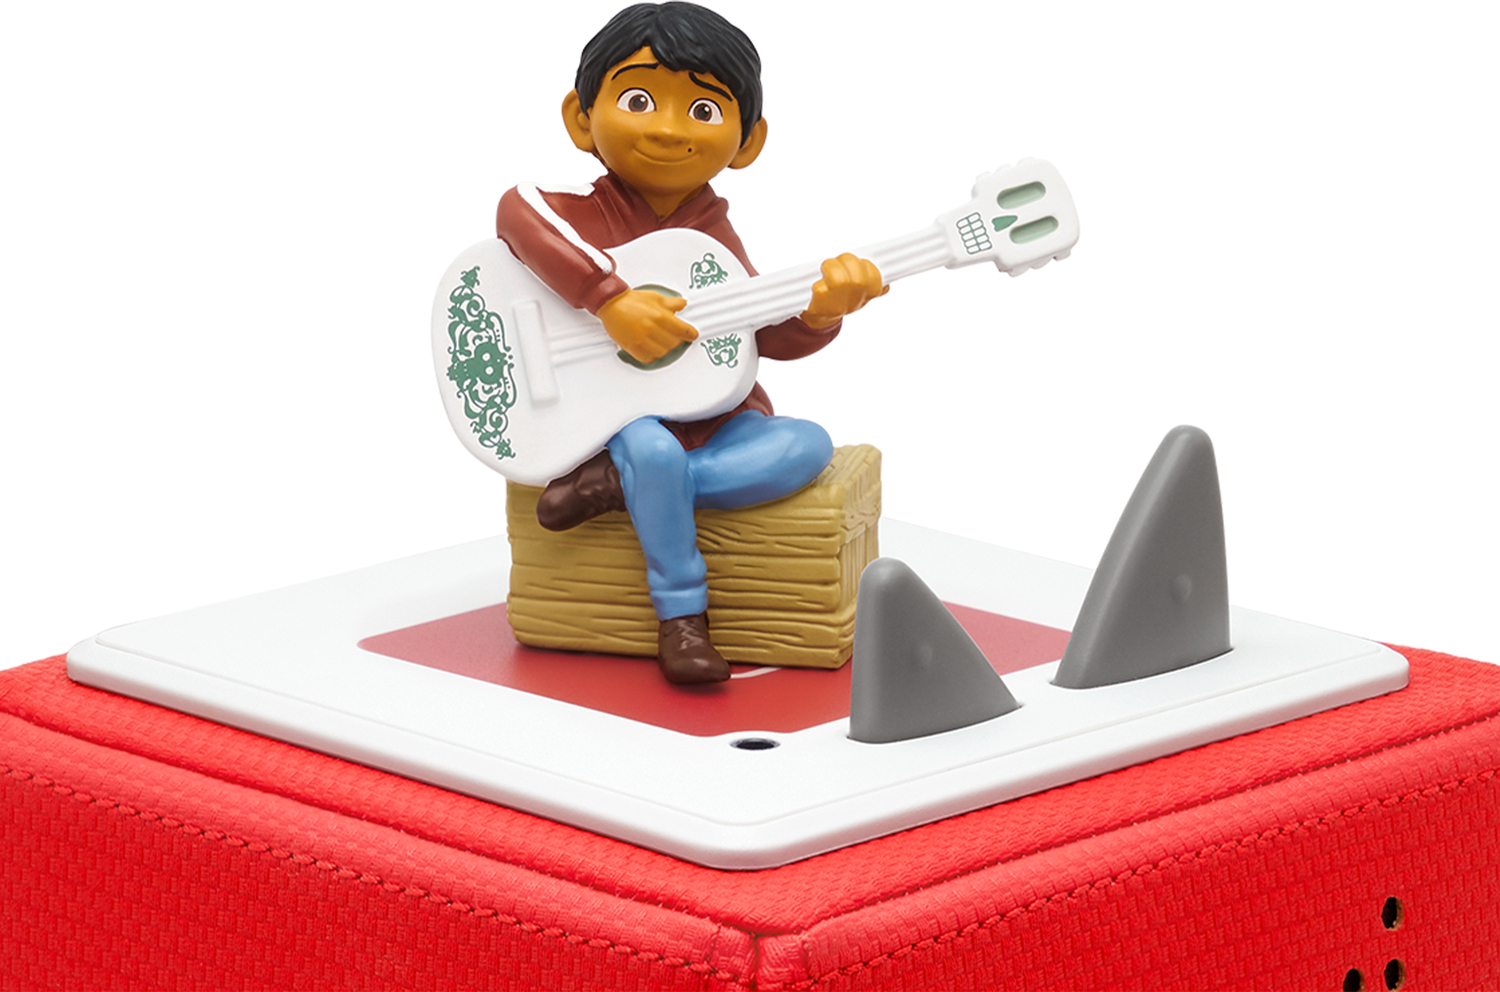 Disney / Pixar Coco Miguel Plush (with Guitar)